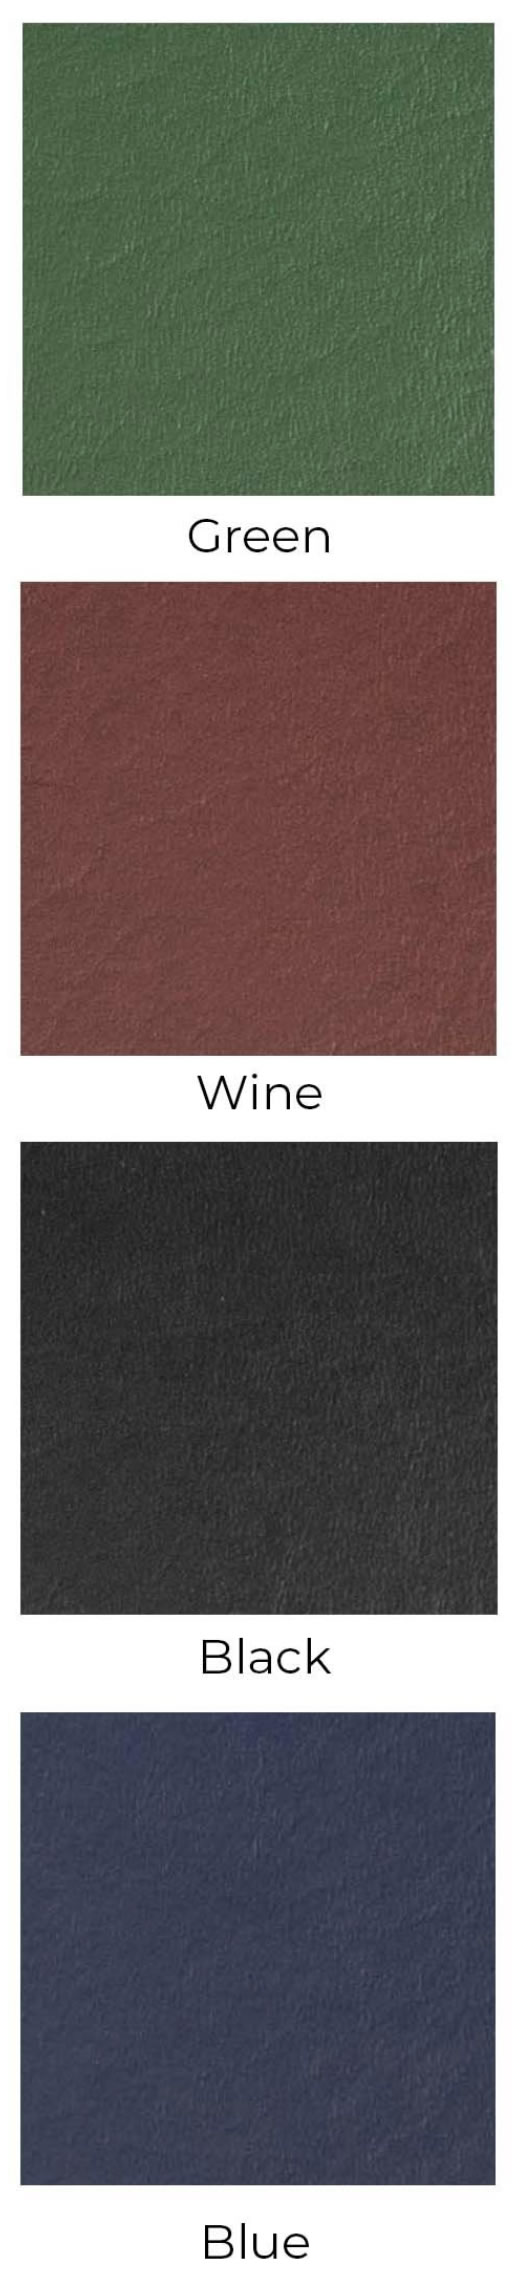 Color Chart for Pinehurst Menu Covers